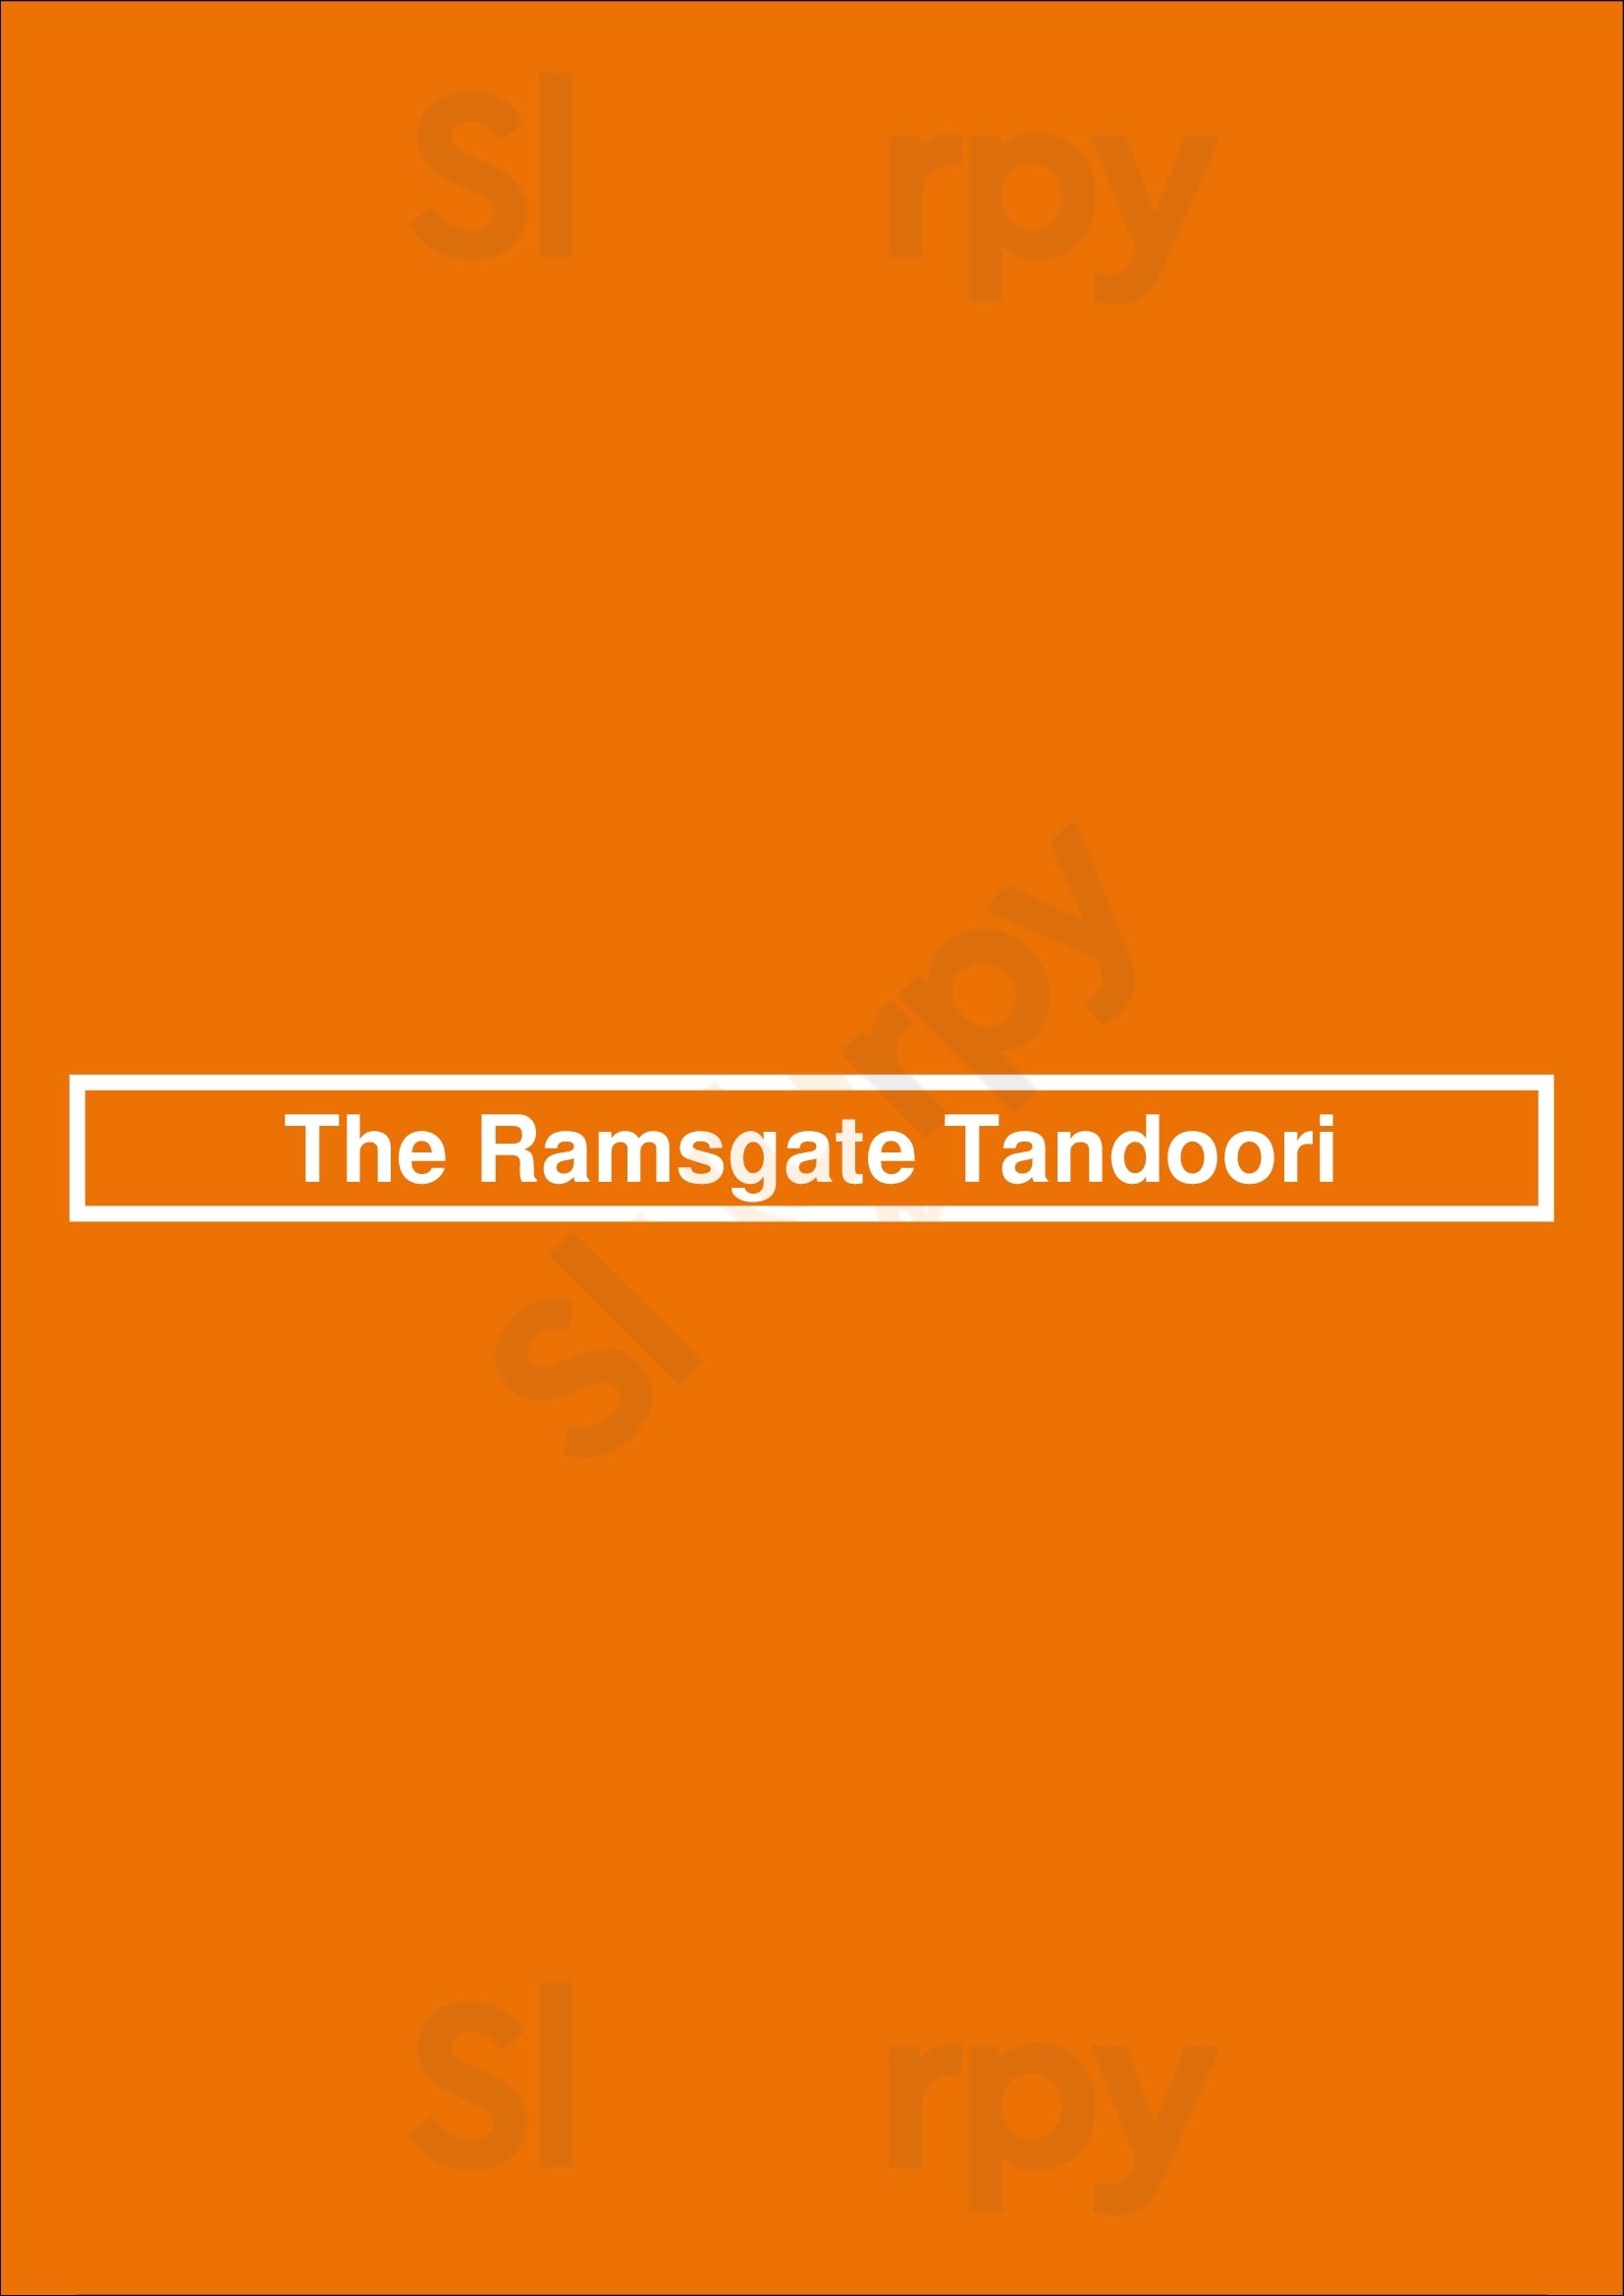 The Ramsgate Tandoori Ramsgate Menu - 1